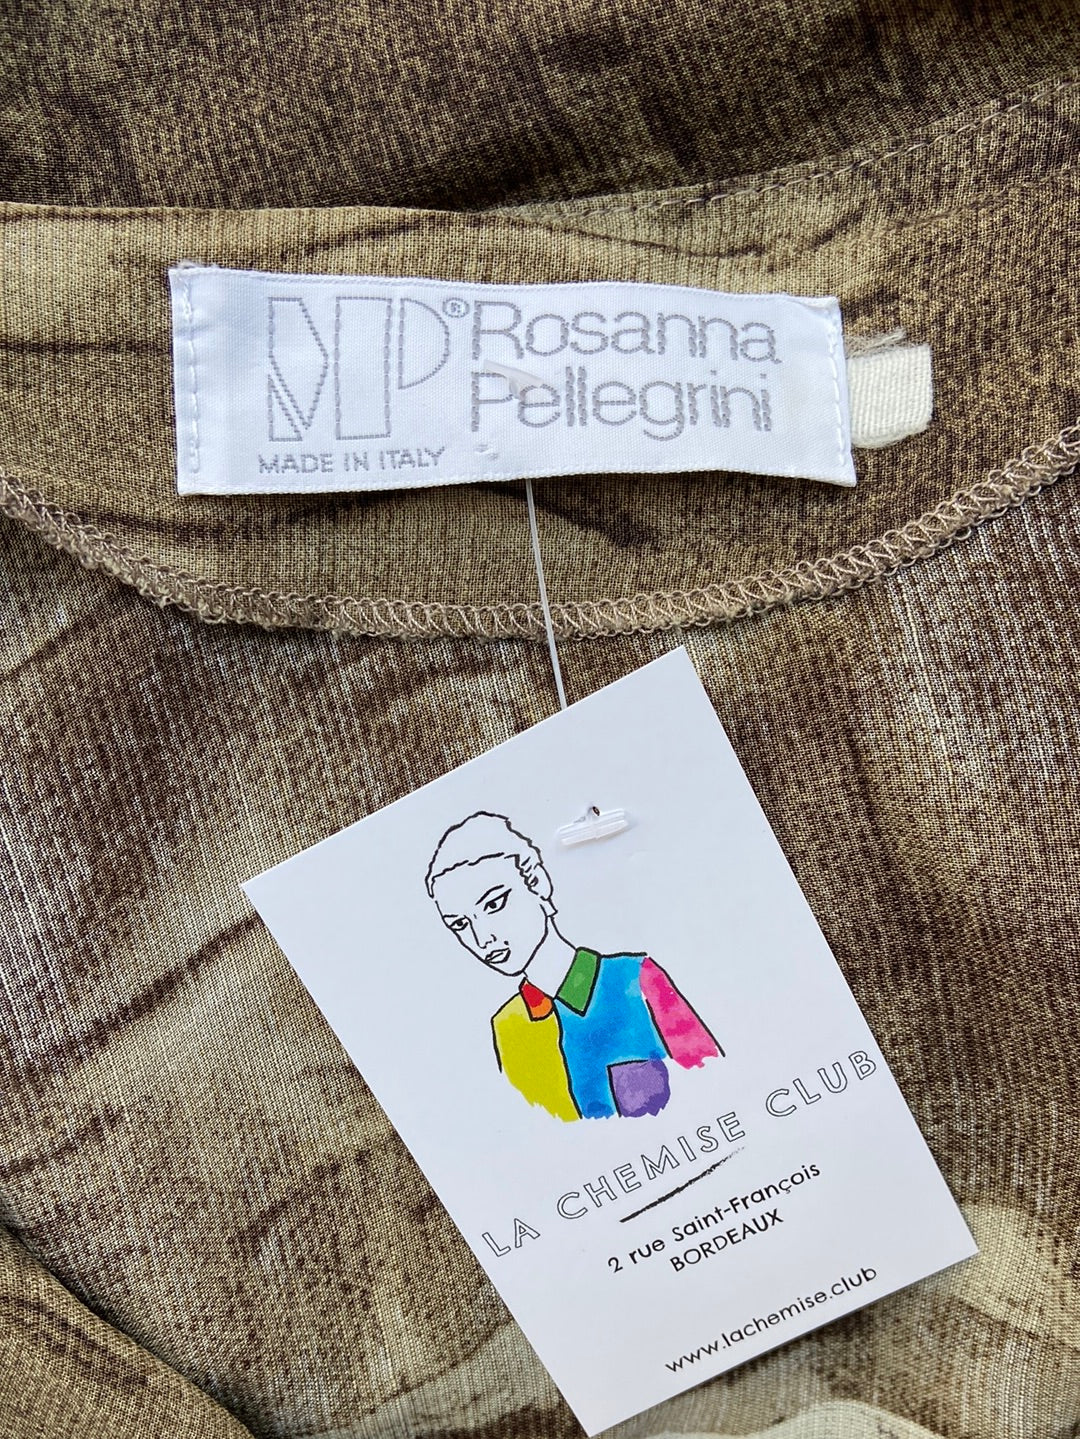 Pellegrini shirt